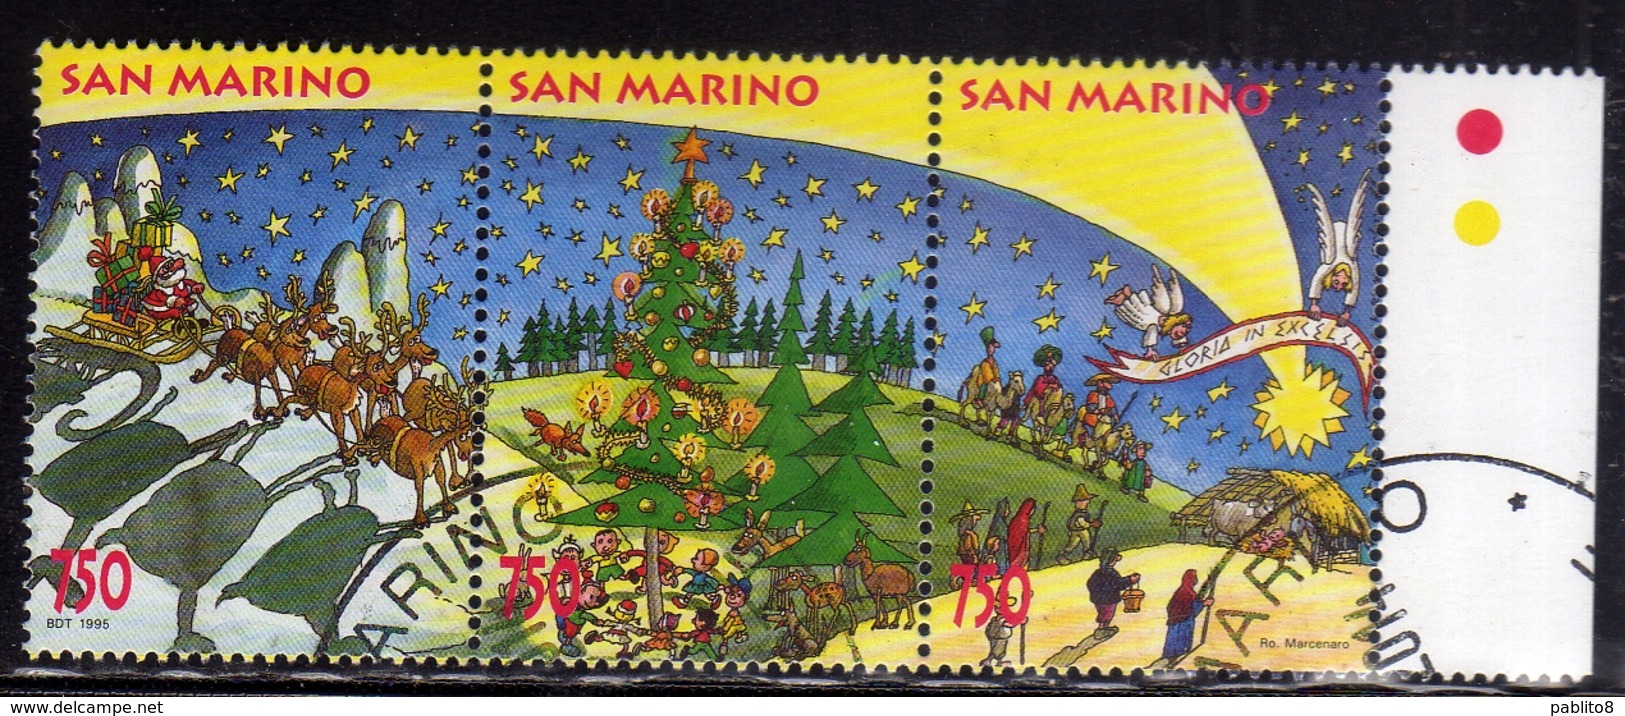 REPUBBLICA DI SAN MARINO 1995 NATALE CHRISTMAS NOEL WEIHNACHTEN NAVIDAD SERIE COMPLETA COMPLETE SET USATA USED OBLITERE' - Used Stamps